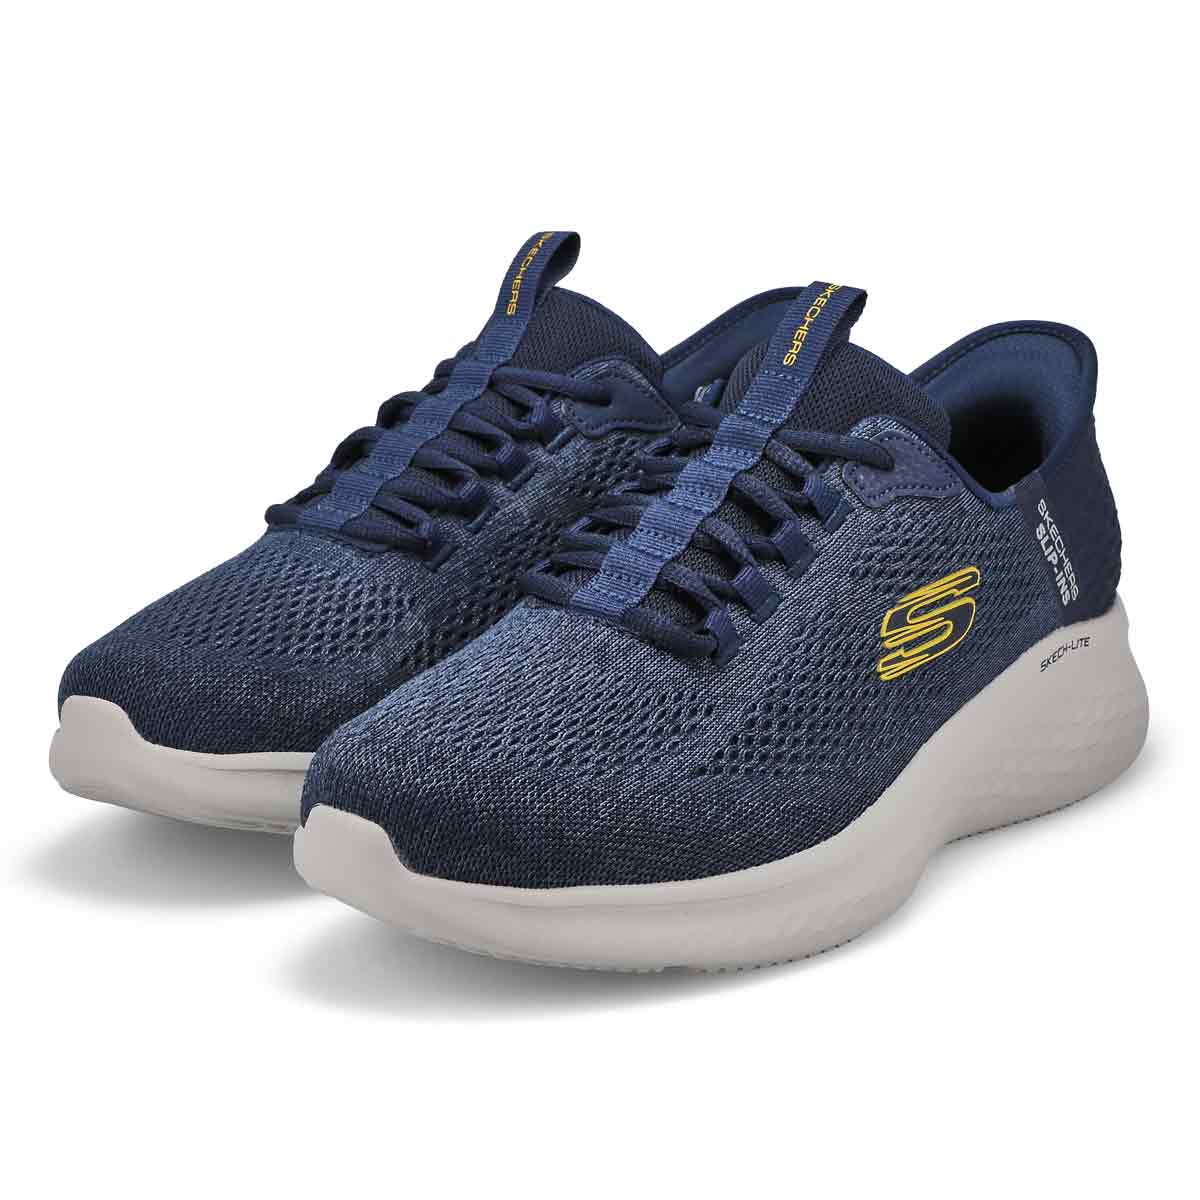 Men's Skech-Lite Pro Slip-Ins Sneaker - Navy/Yellow